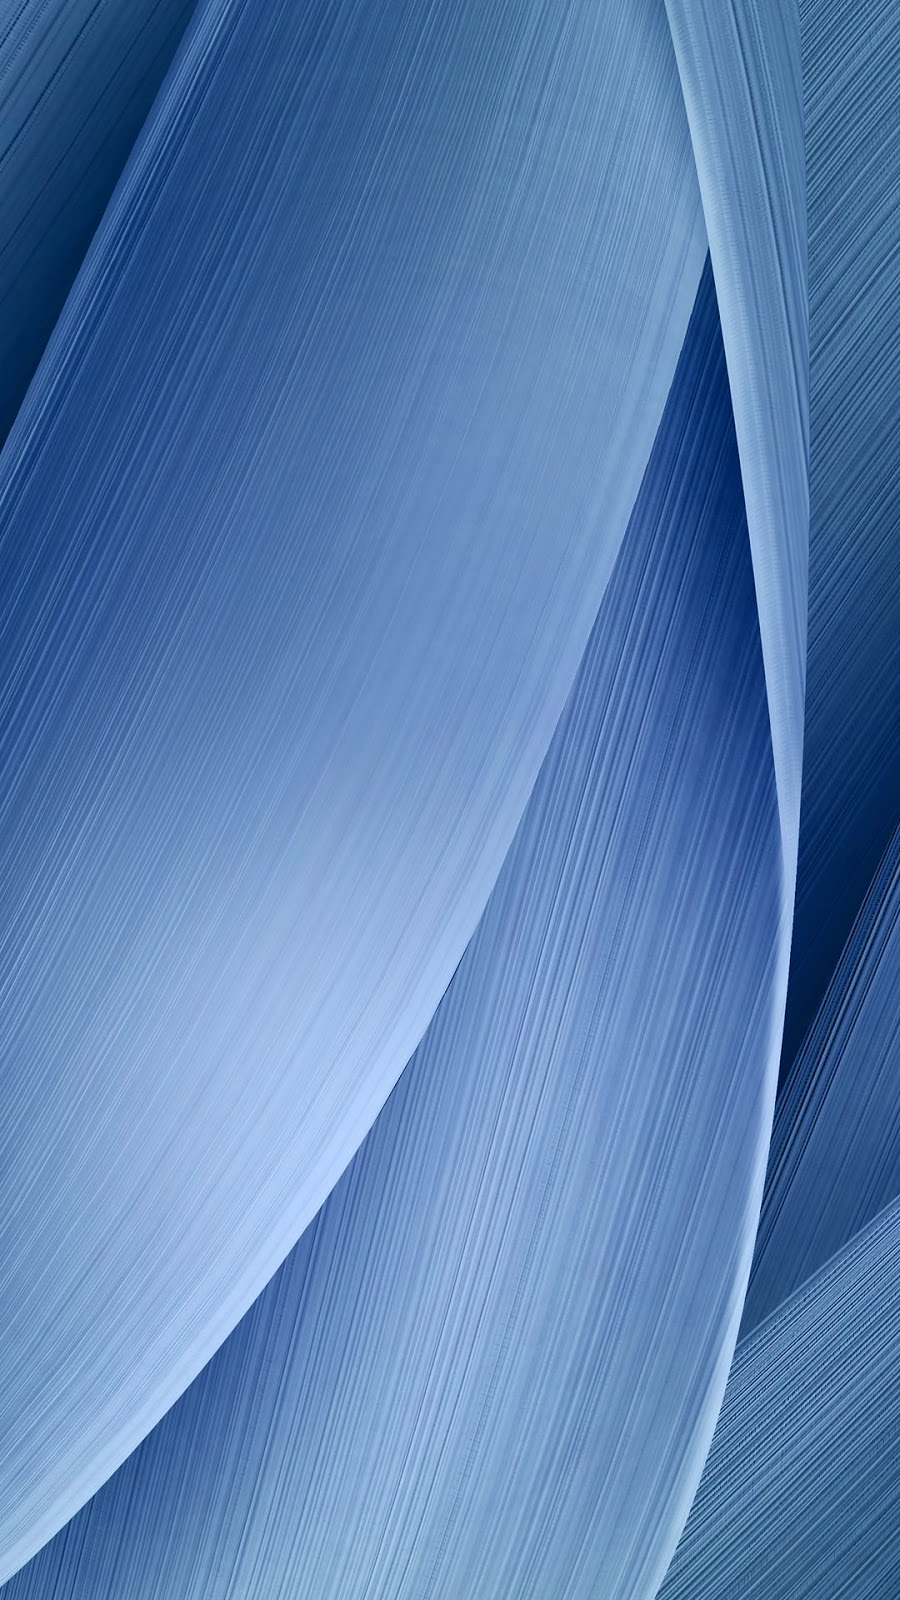 asus zenfone 2レーザー壁紙,青い,波,エレクトリックブルー,グラフィックス,スペース